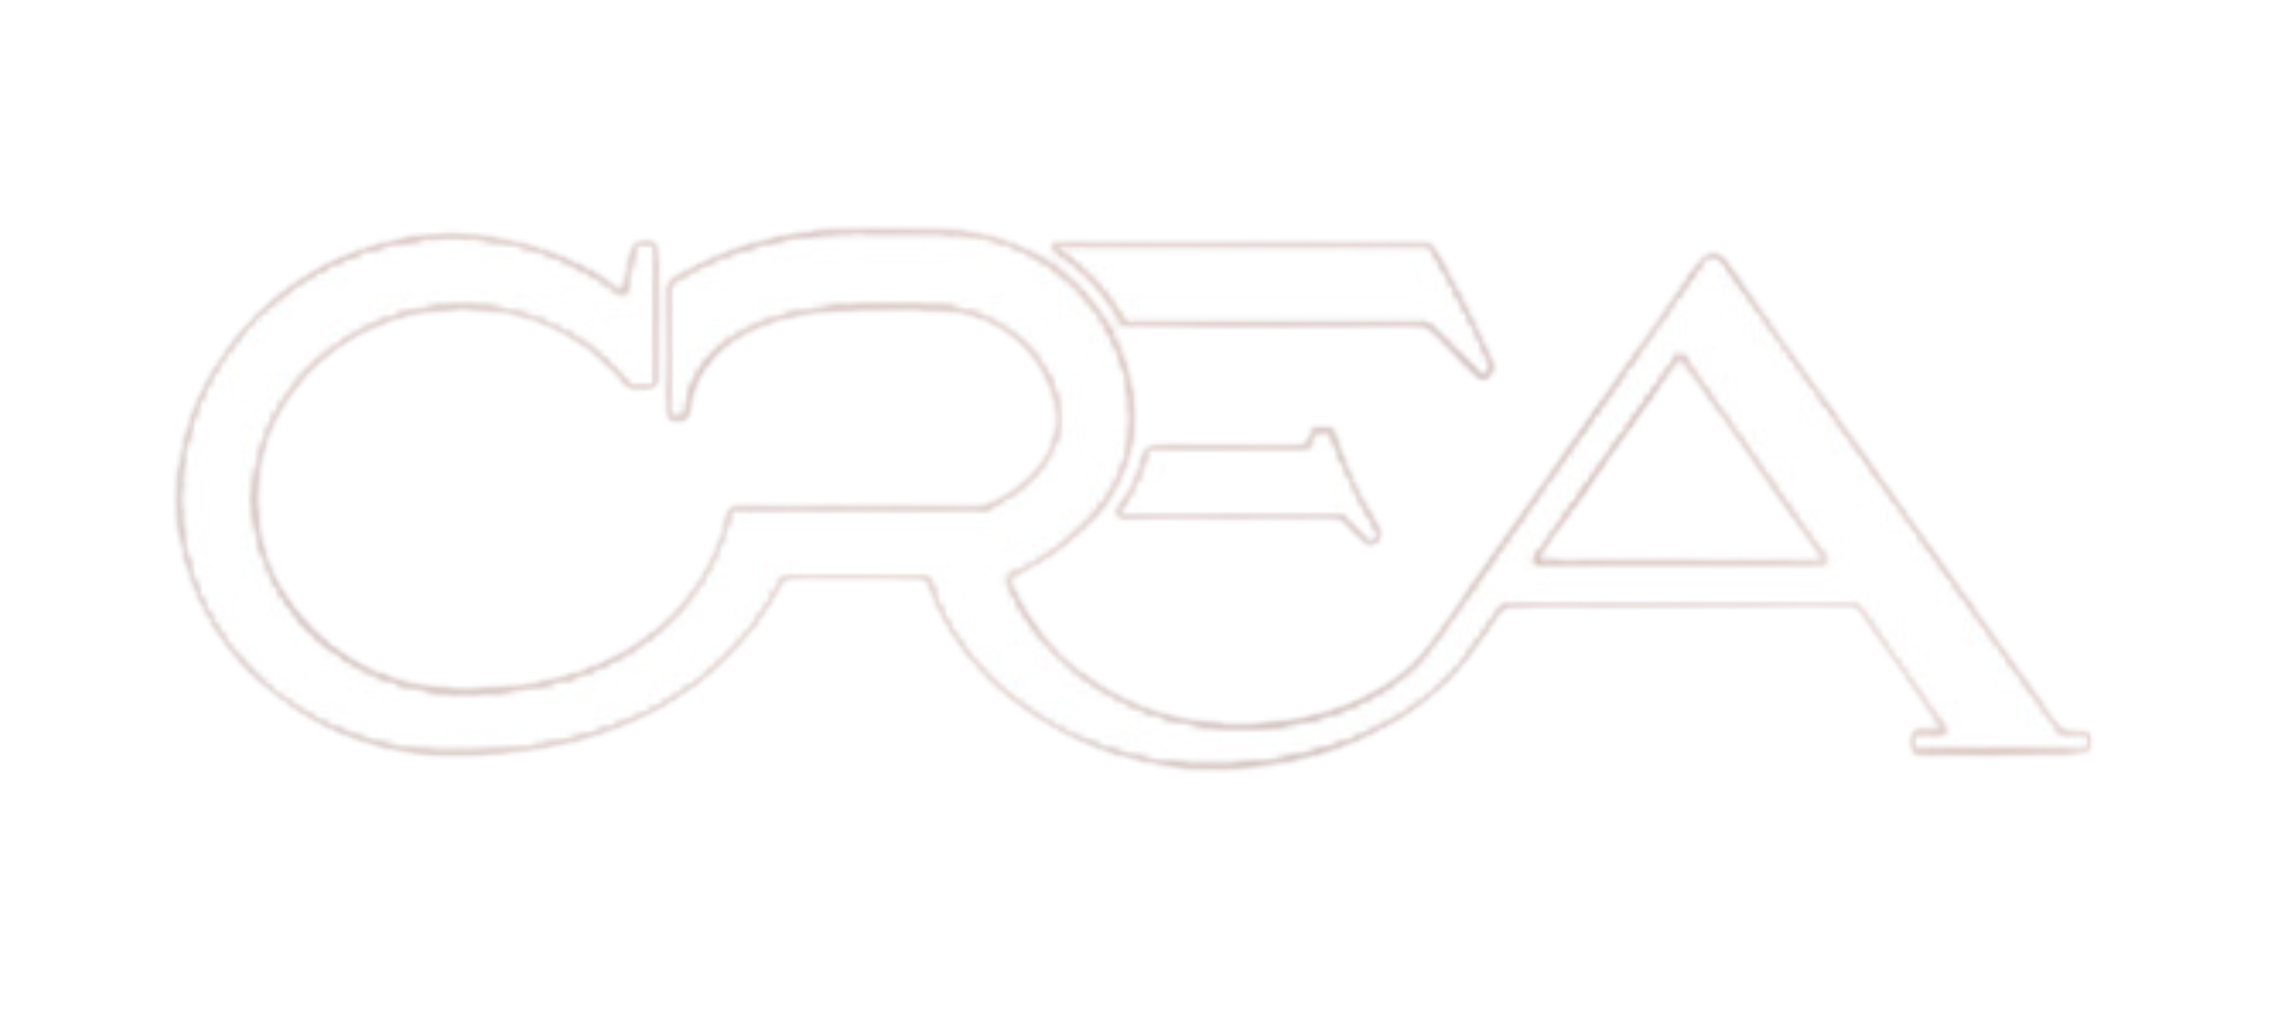 Logo Crea bianco